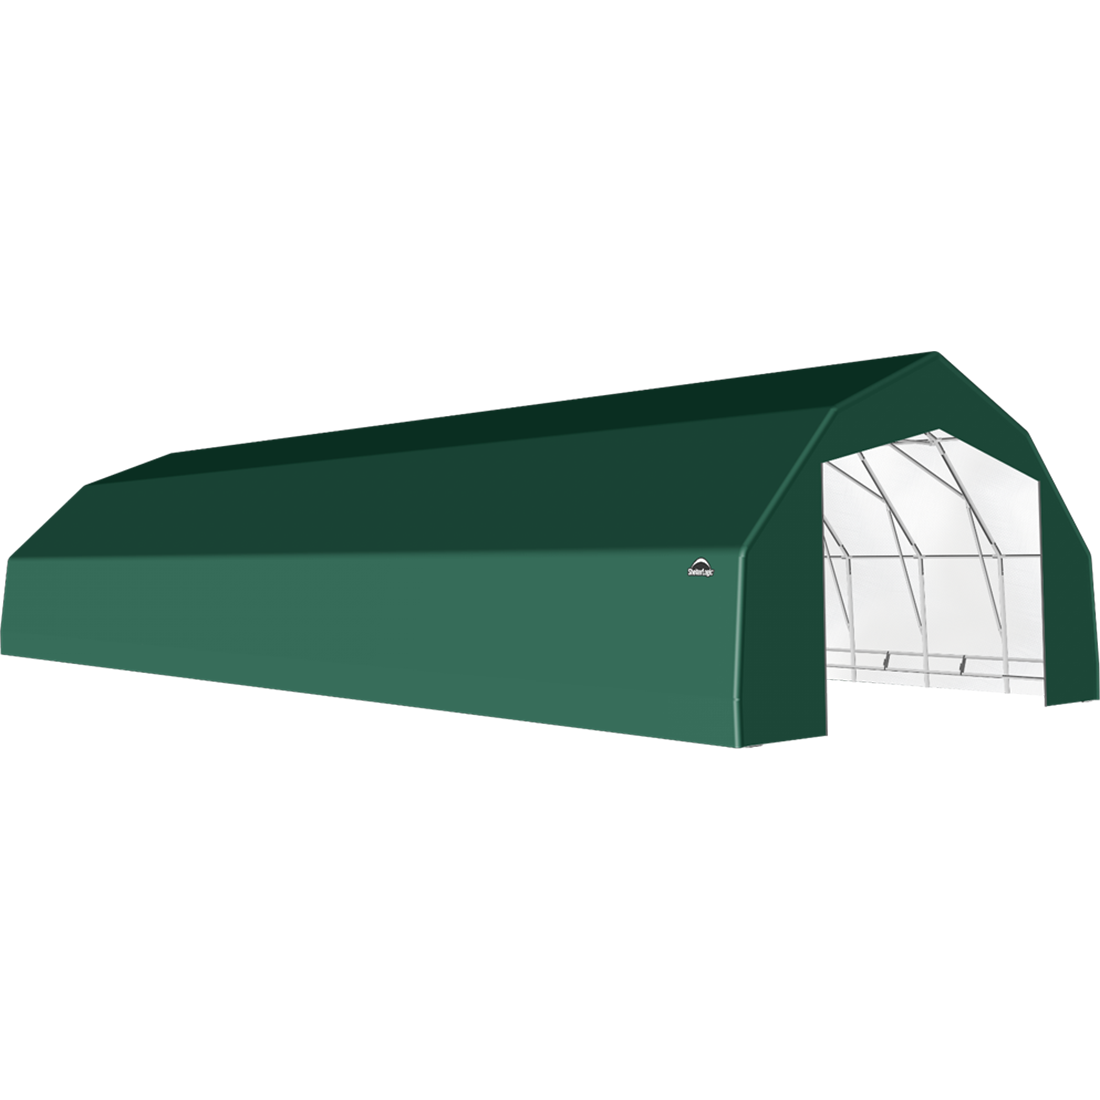 ShelterTech SP Series Barn Shelter, 25 ft. x 64 ft. x 14 ft. Heavy Duty PVC 14.5 oz. Green